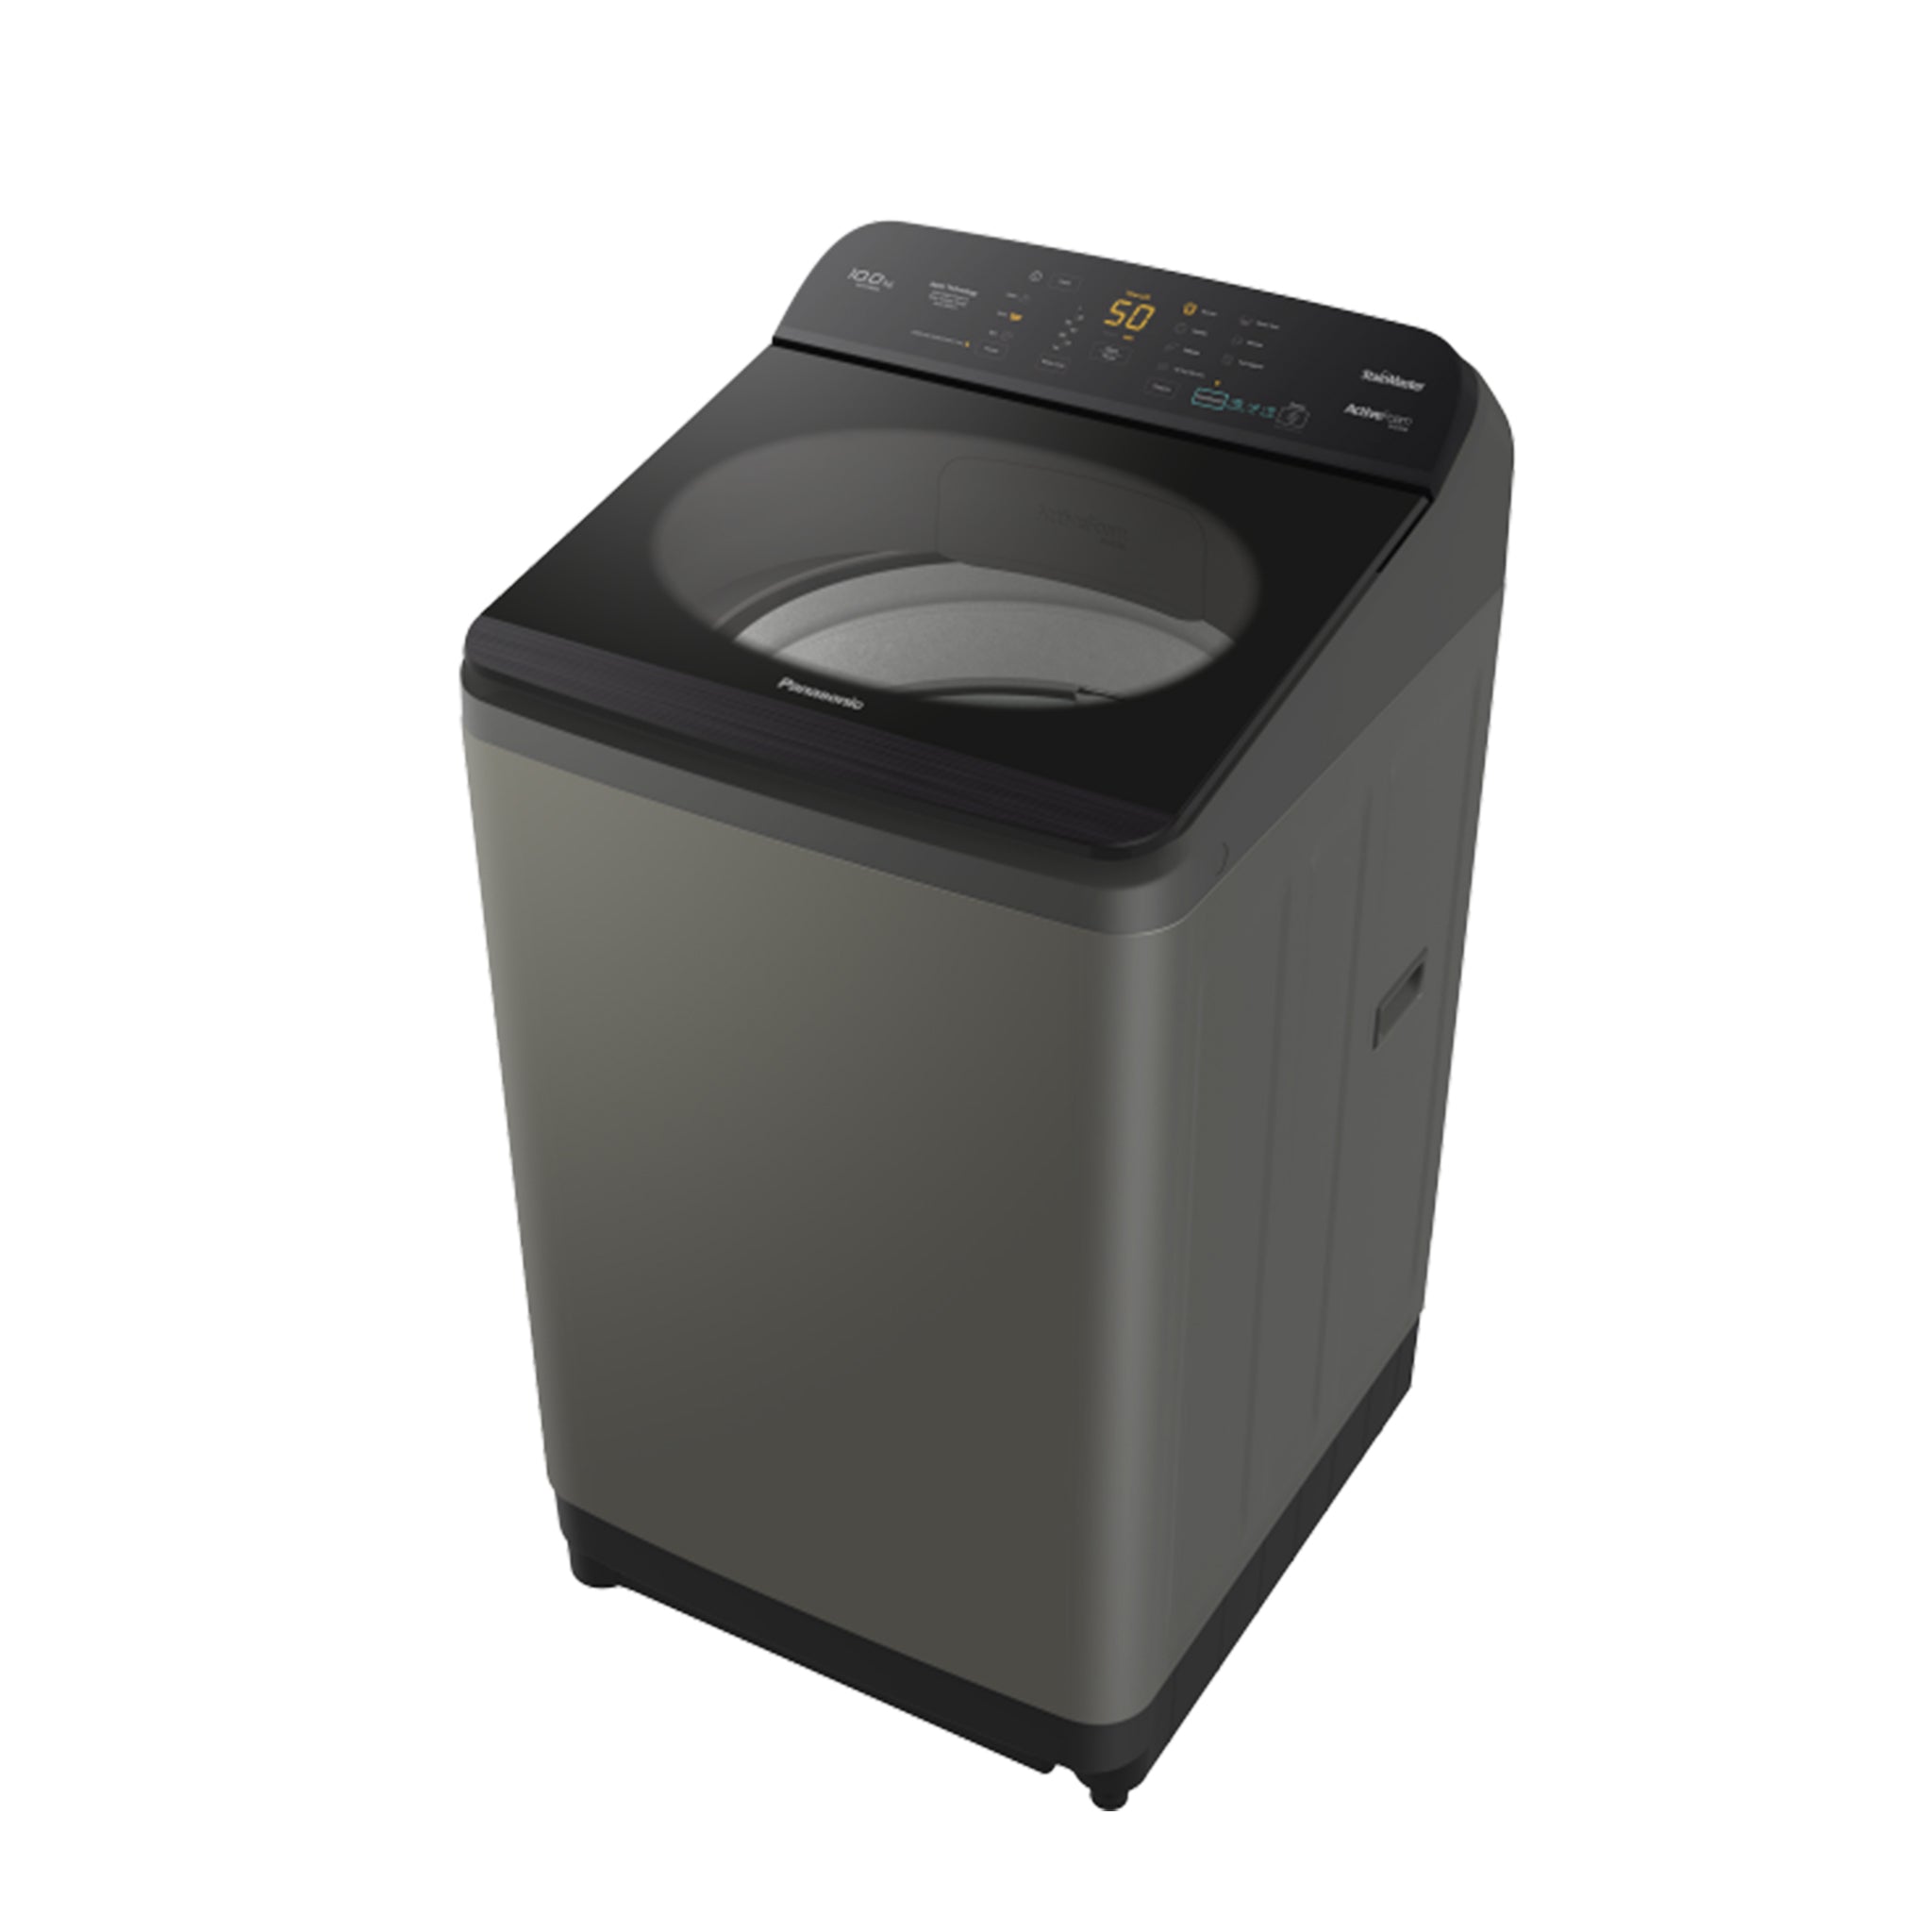 Panasonic NA-F100A9DRM for Stain Care Top Load Washing Machine Panasonic